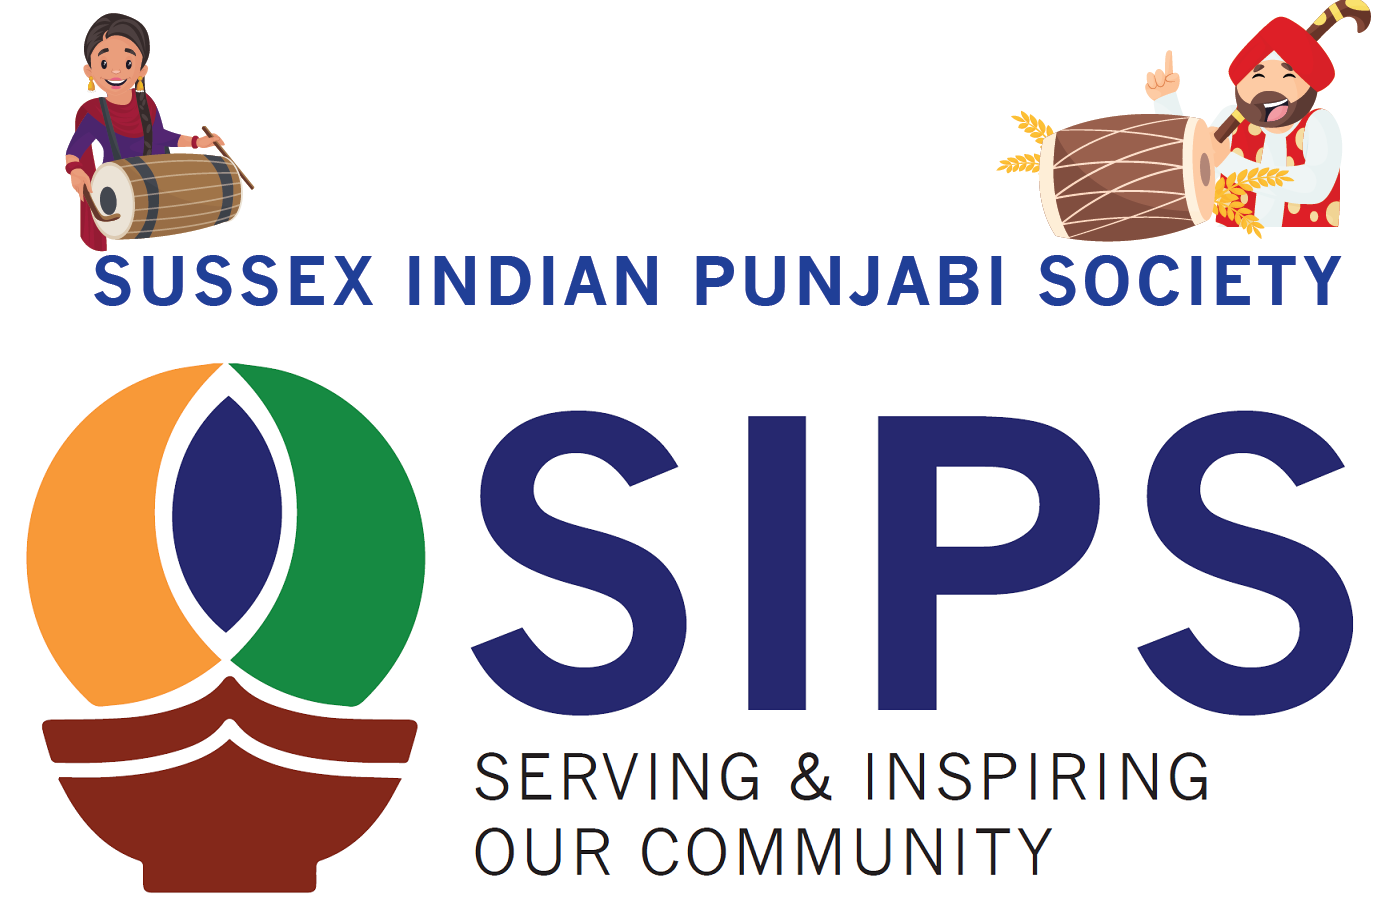 Sussex Indian Punjabi Society